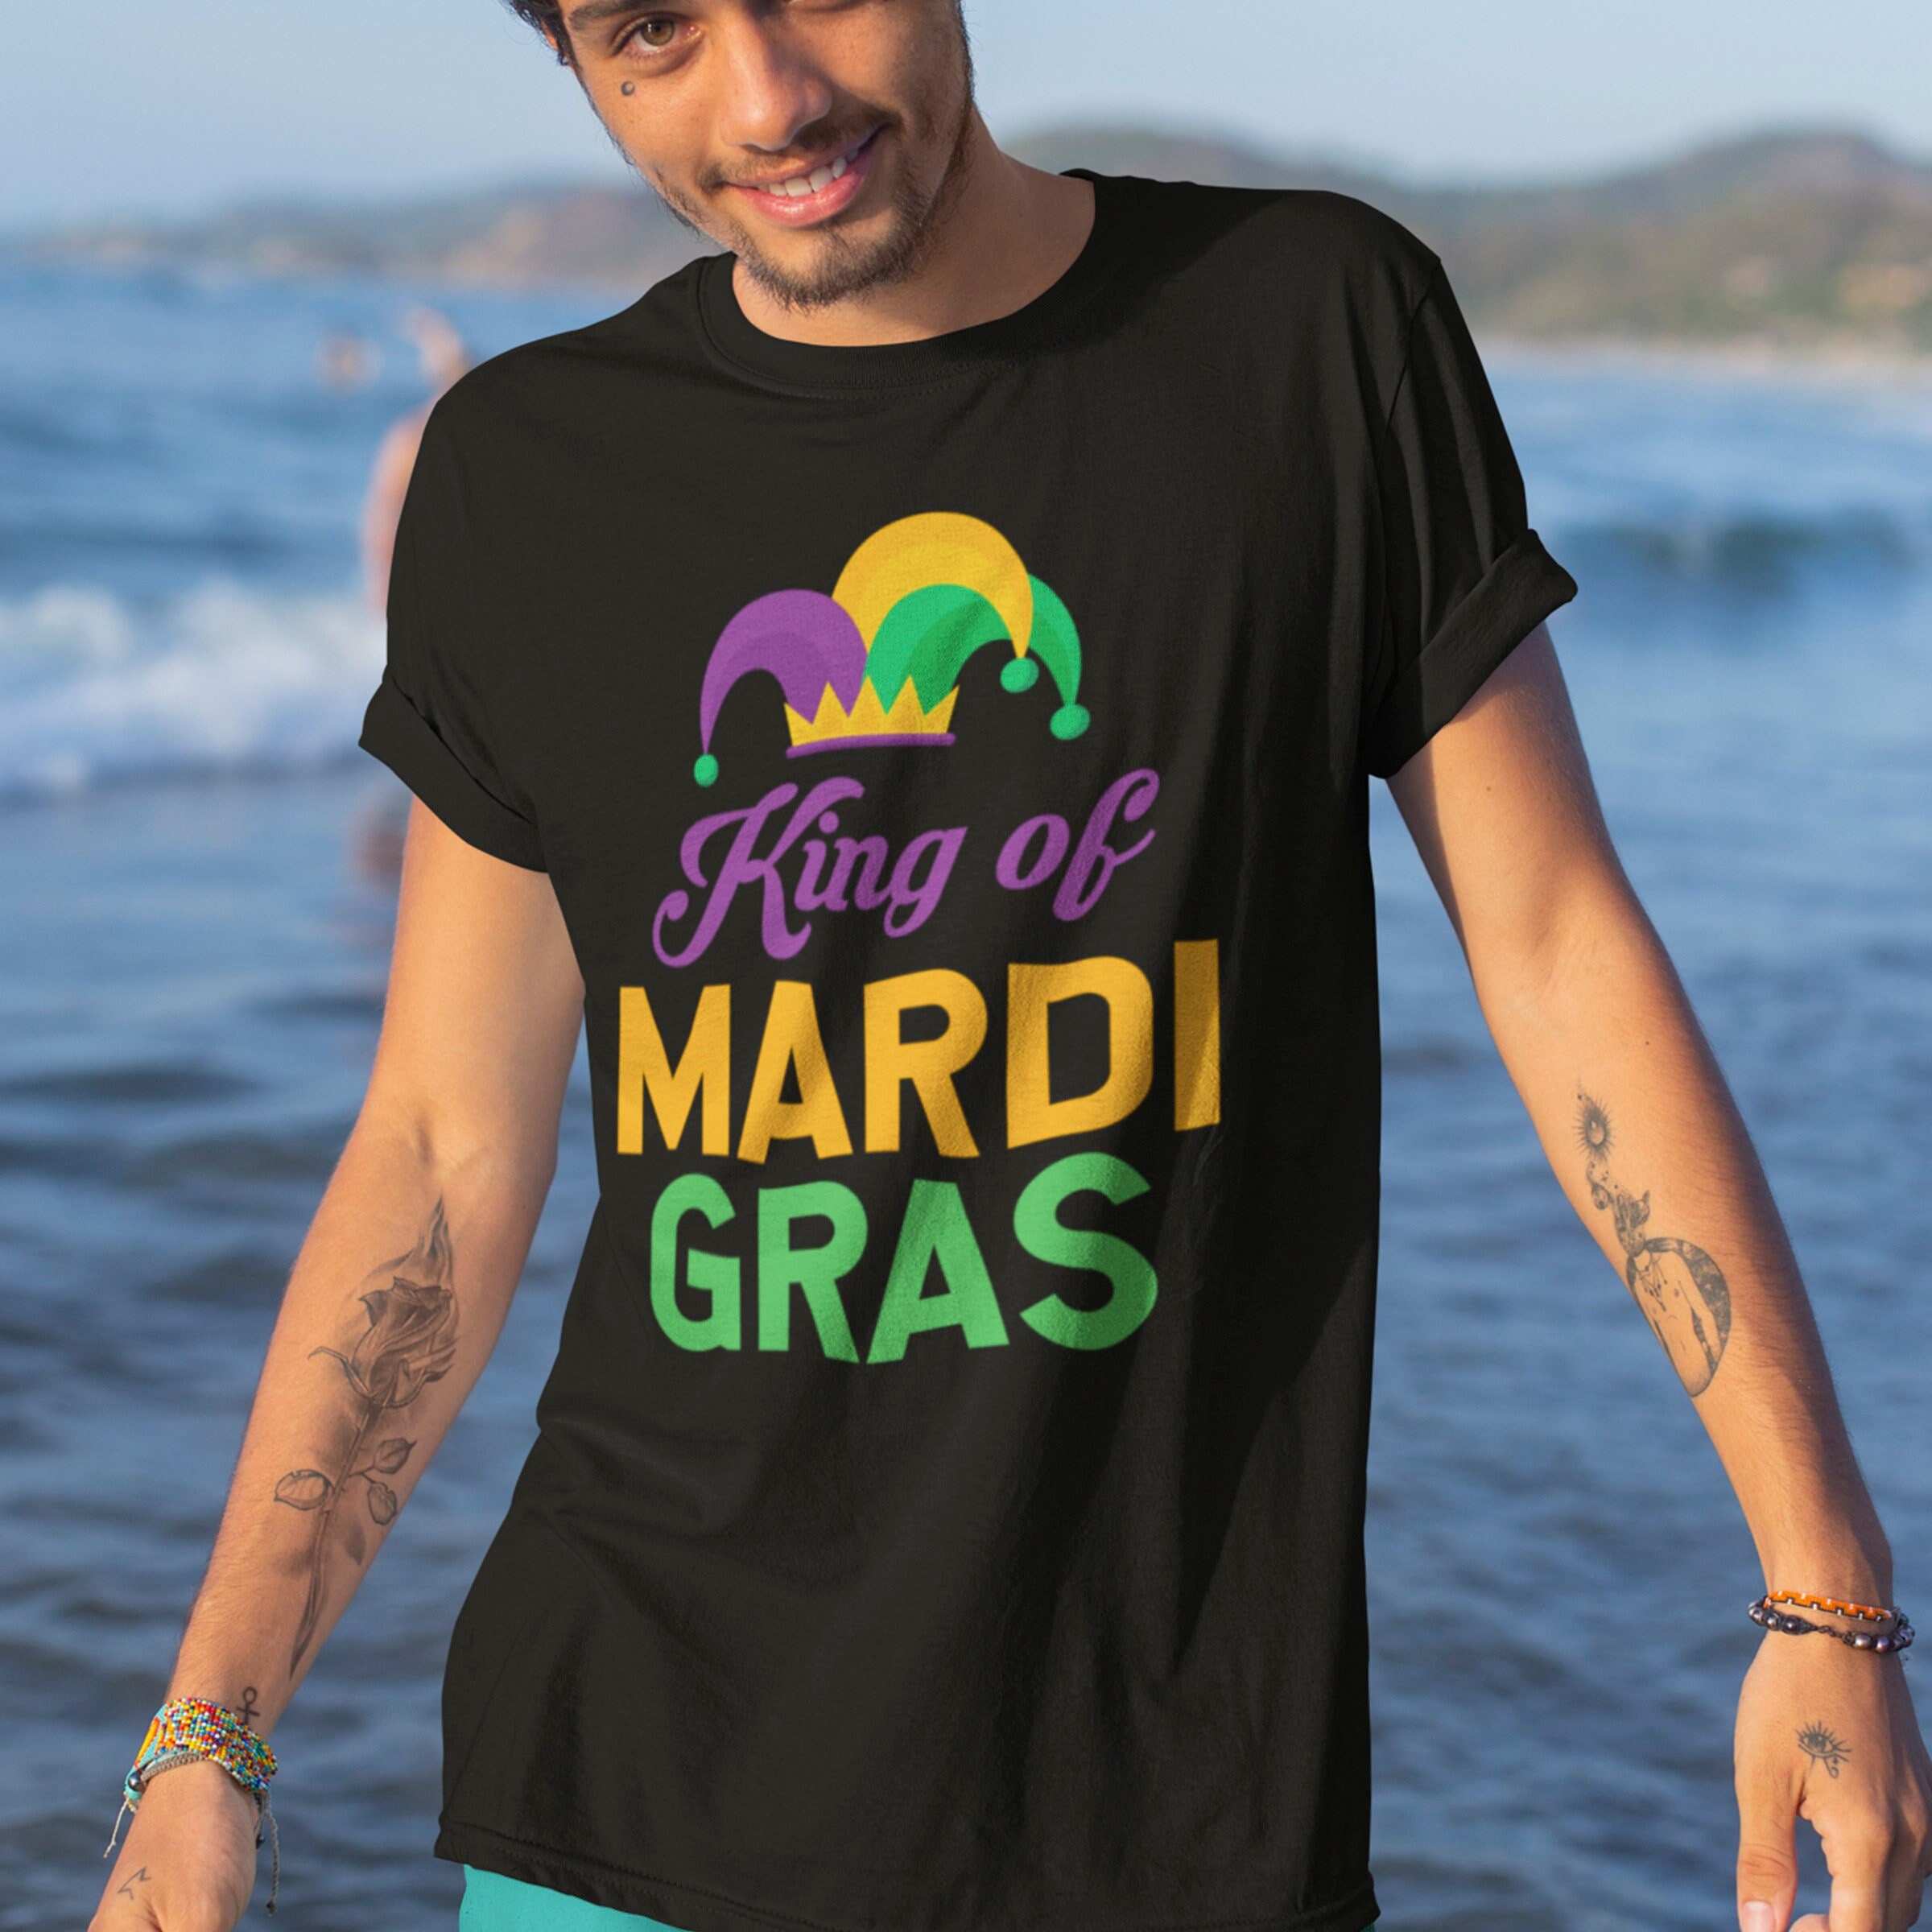 Discover King of Mardi Gras Shirt, Mardi Gras Carnival T-Shirt, Adult Mardi Gras Shirt